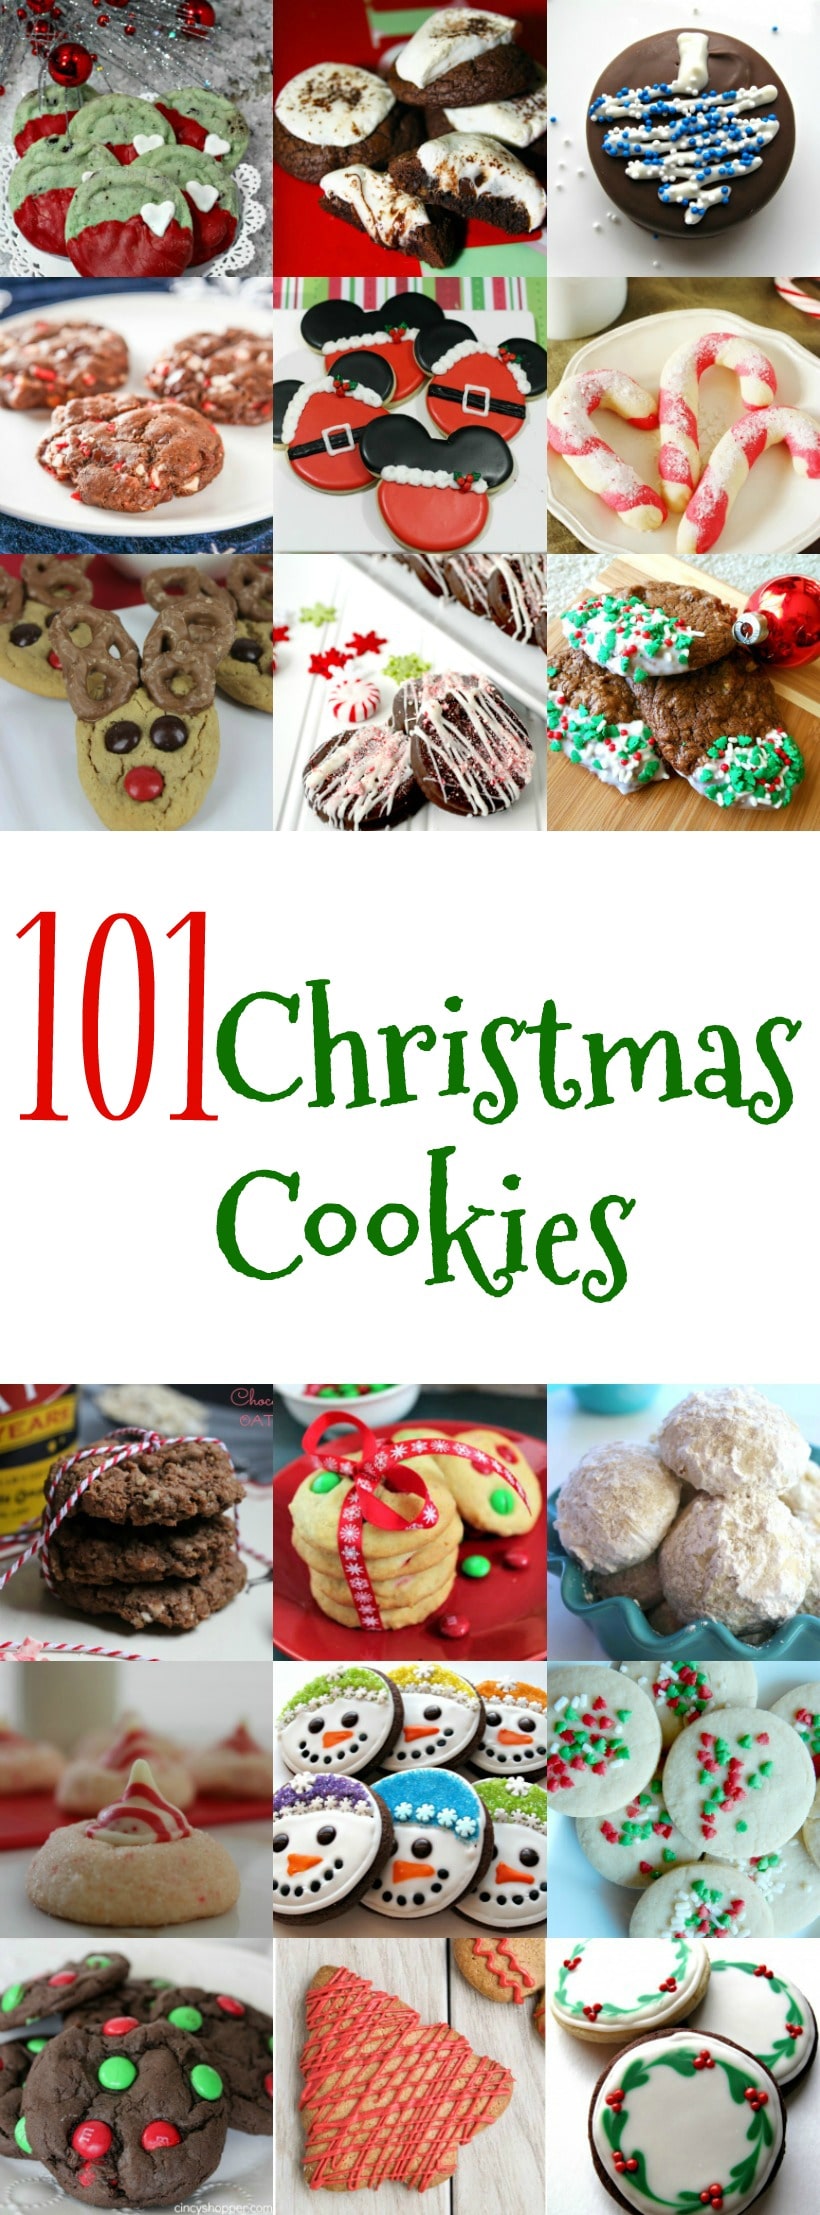 101 Christmas Cookies